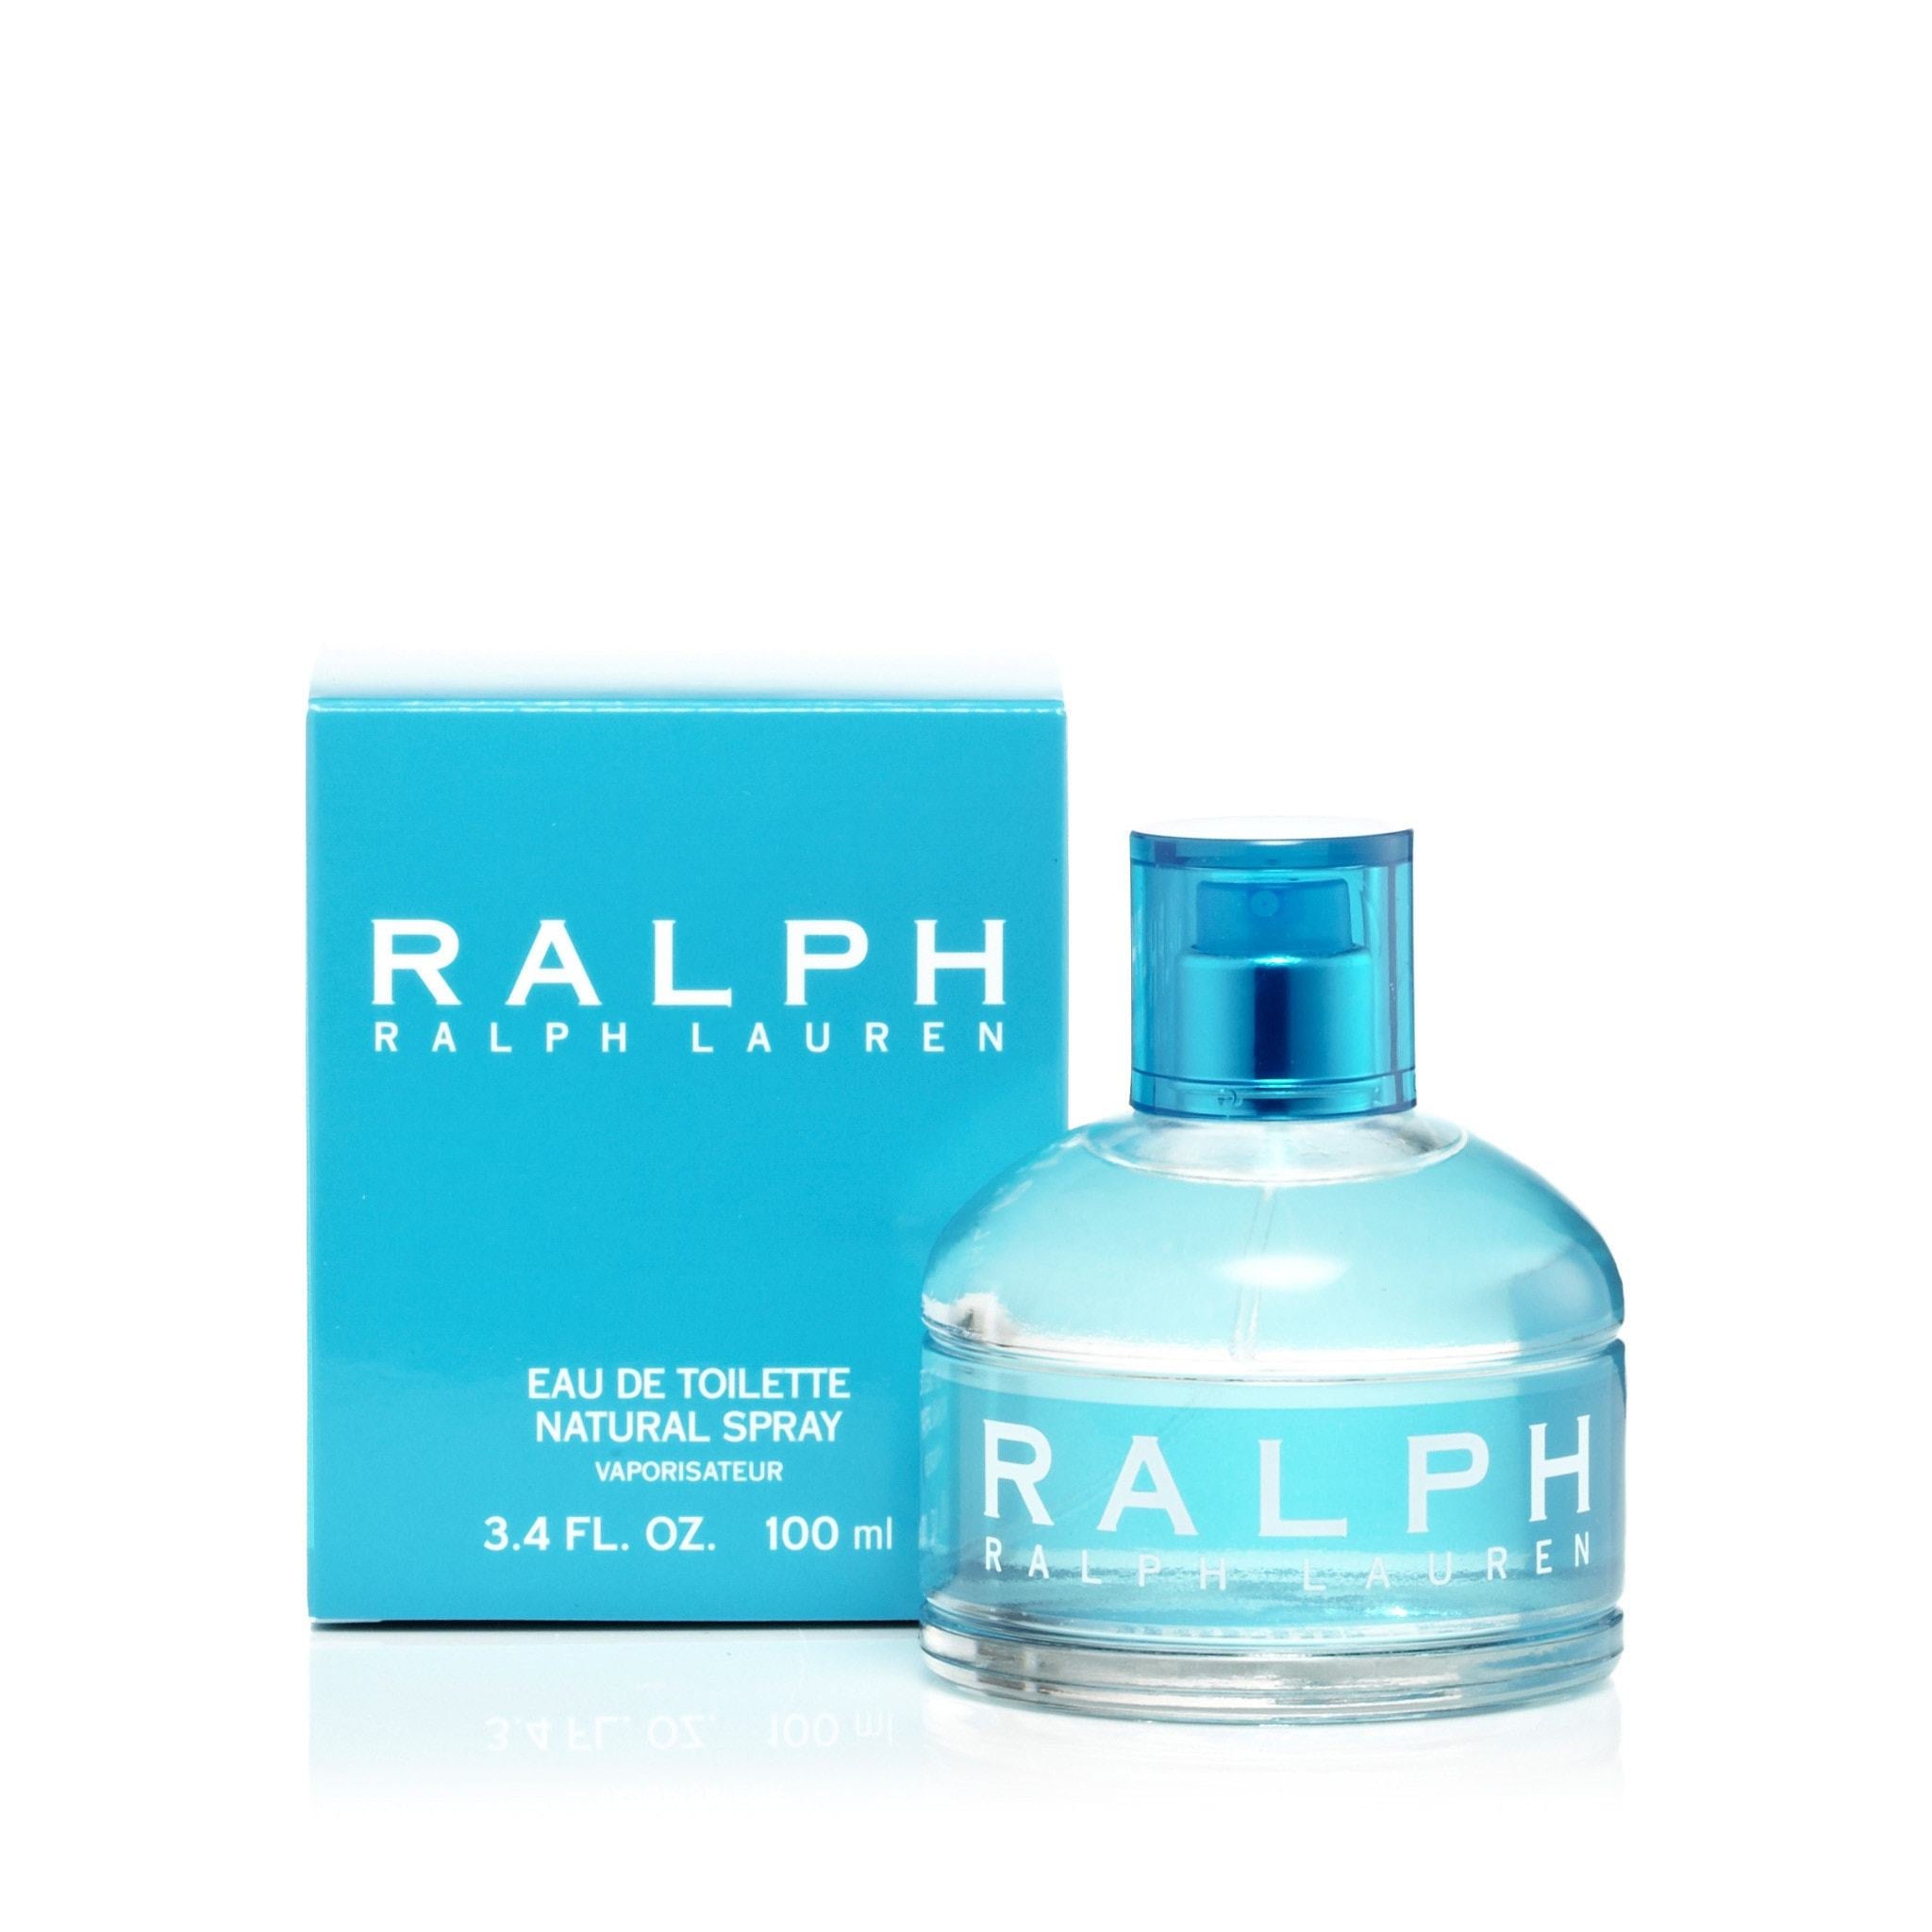 Lauren Perfume by Ralph Lauren 4 oz EDT Spray for Women NEW IN BOX SEALED